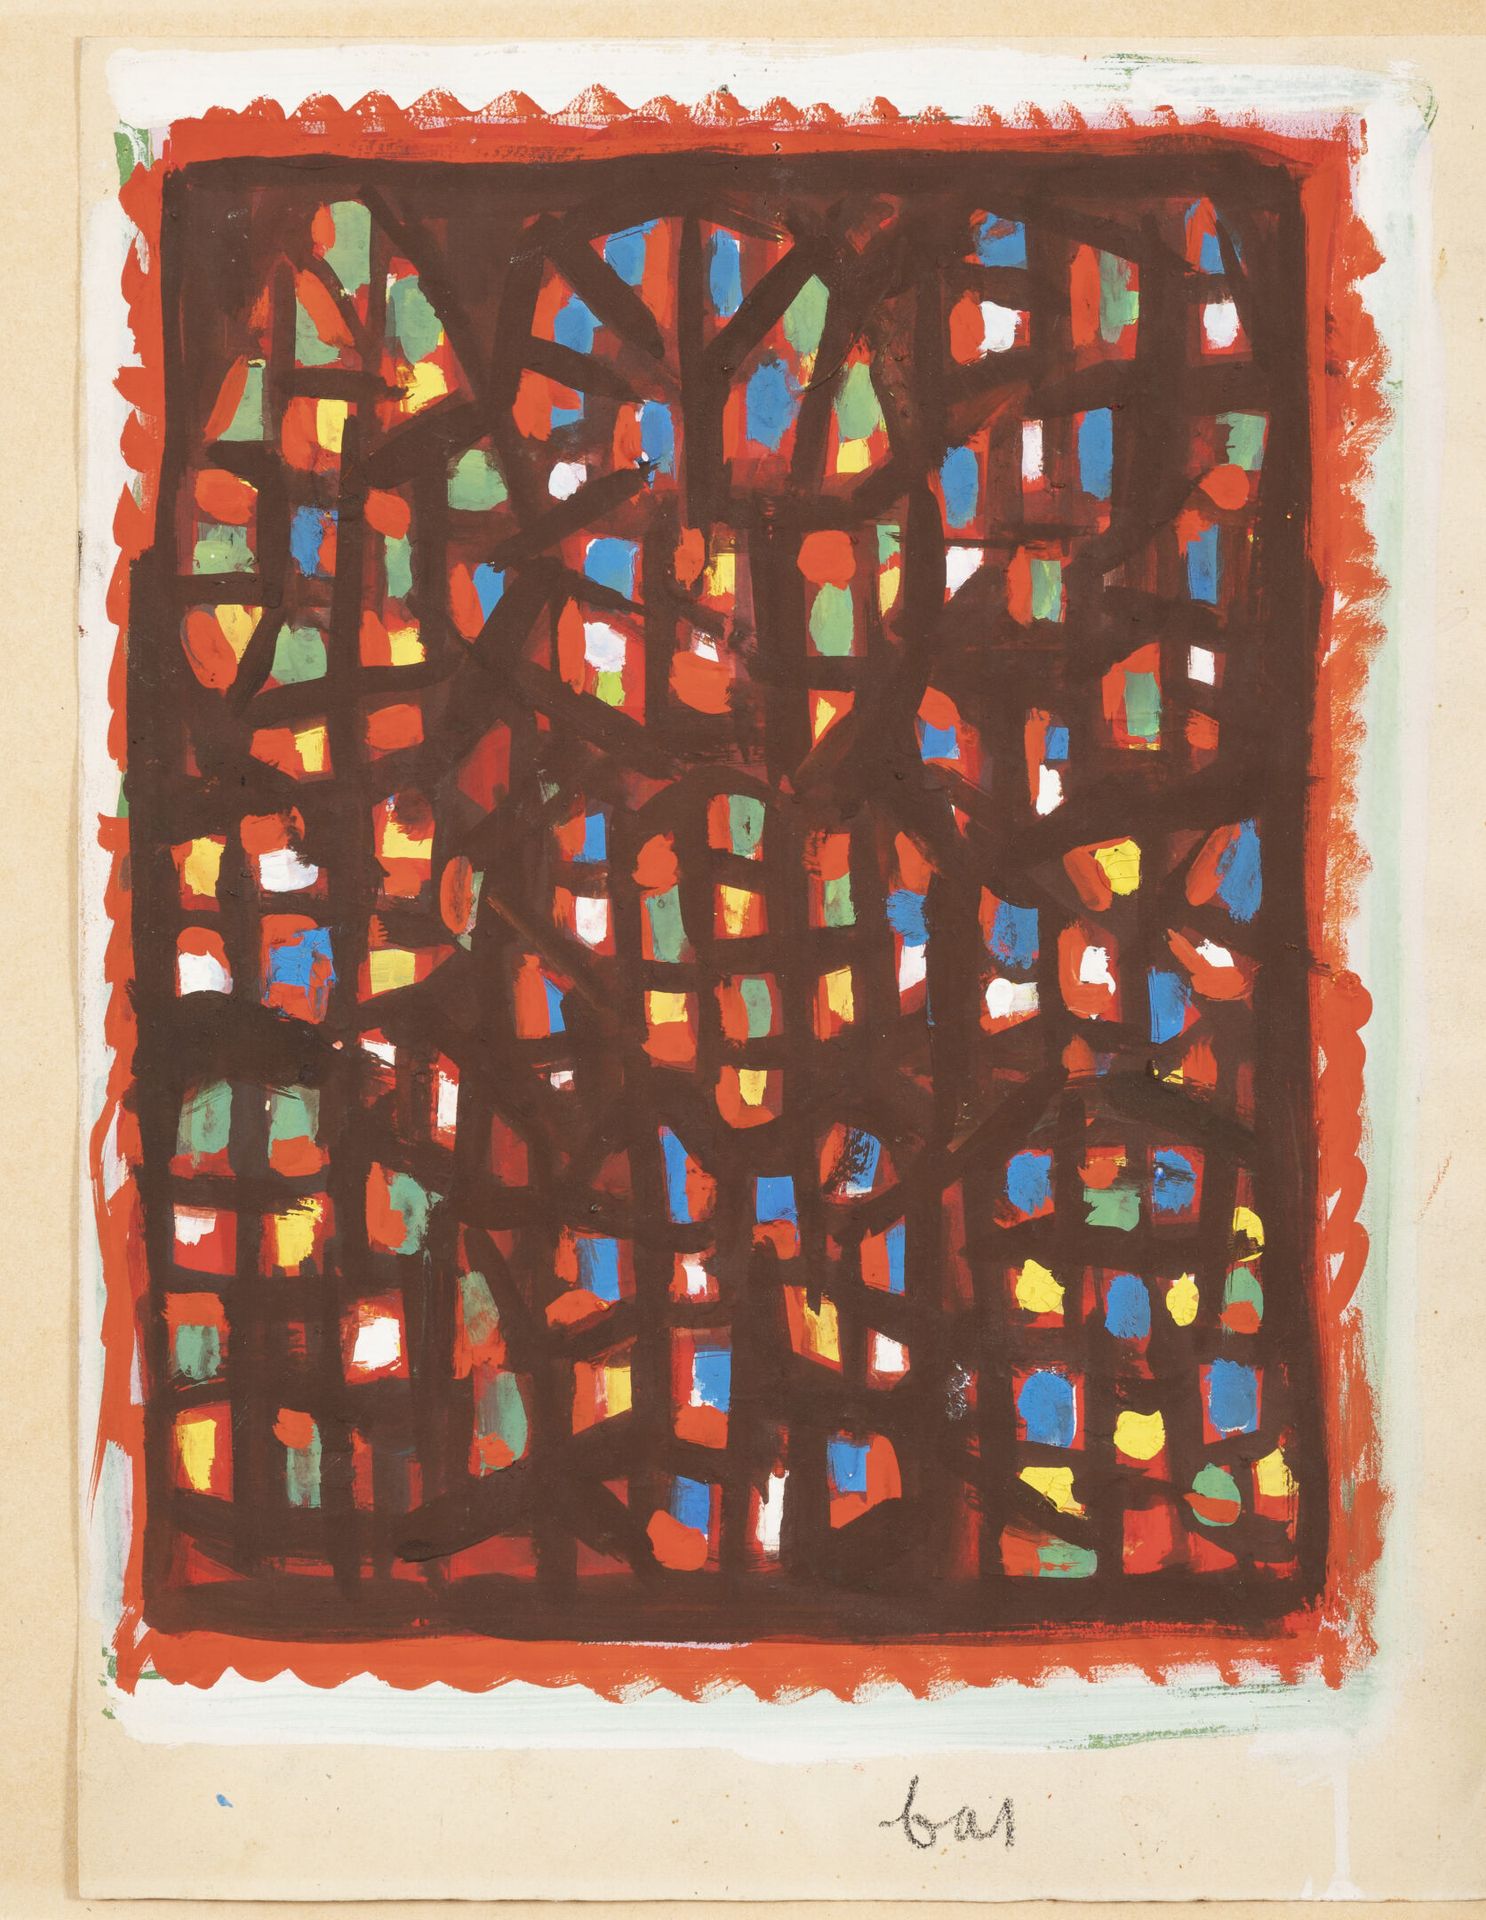 Jean LEGROS (1917-1981) 无题》，约1955年。
水粉画在纸上。
无符号。
26.5 x 21 厘米。